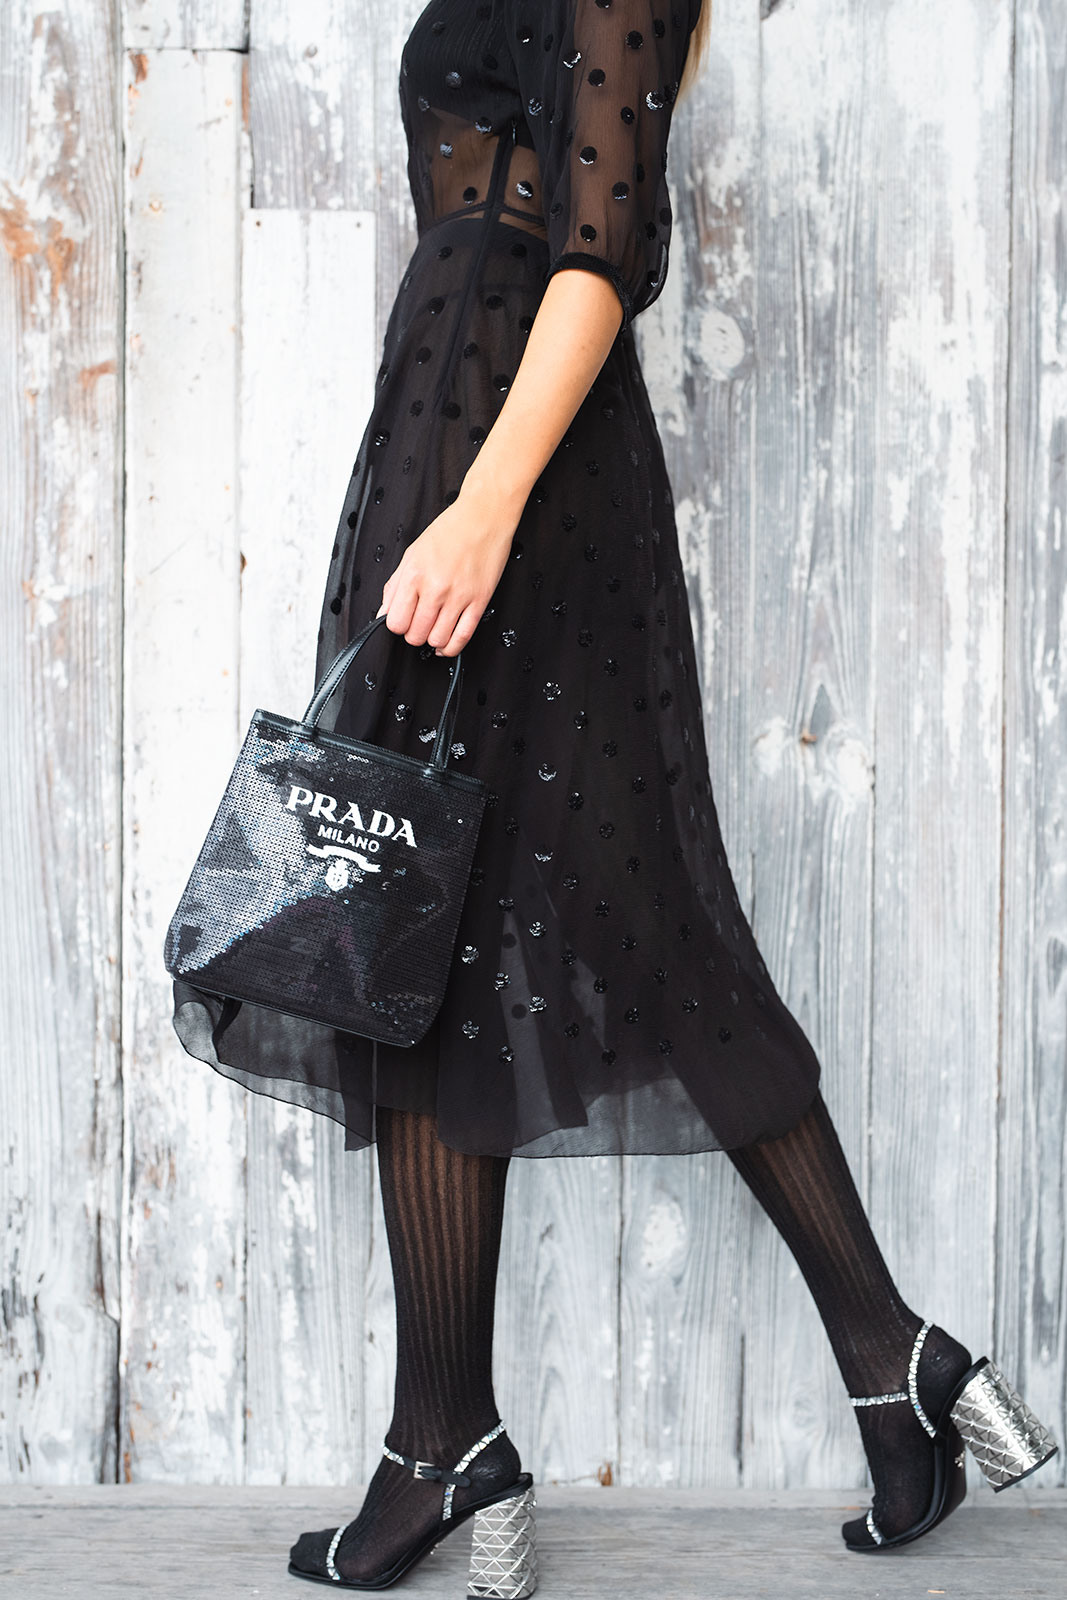 Gray dress, polka dot tights and a black quilted bag - Fashion Tights